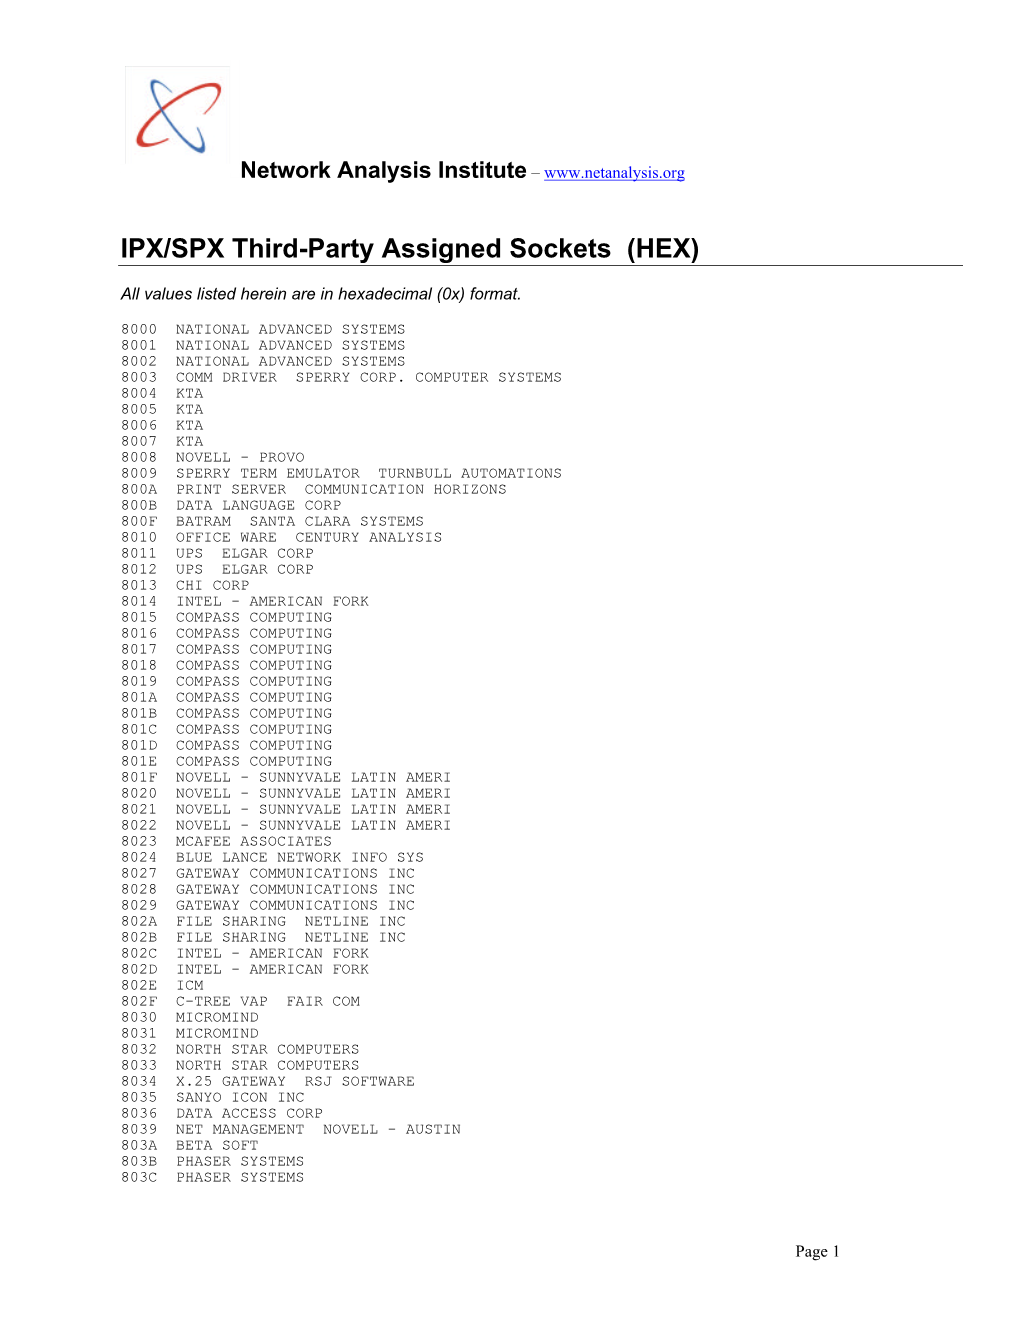 Netware IPX Socket List